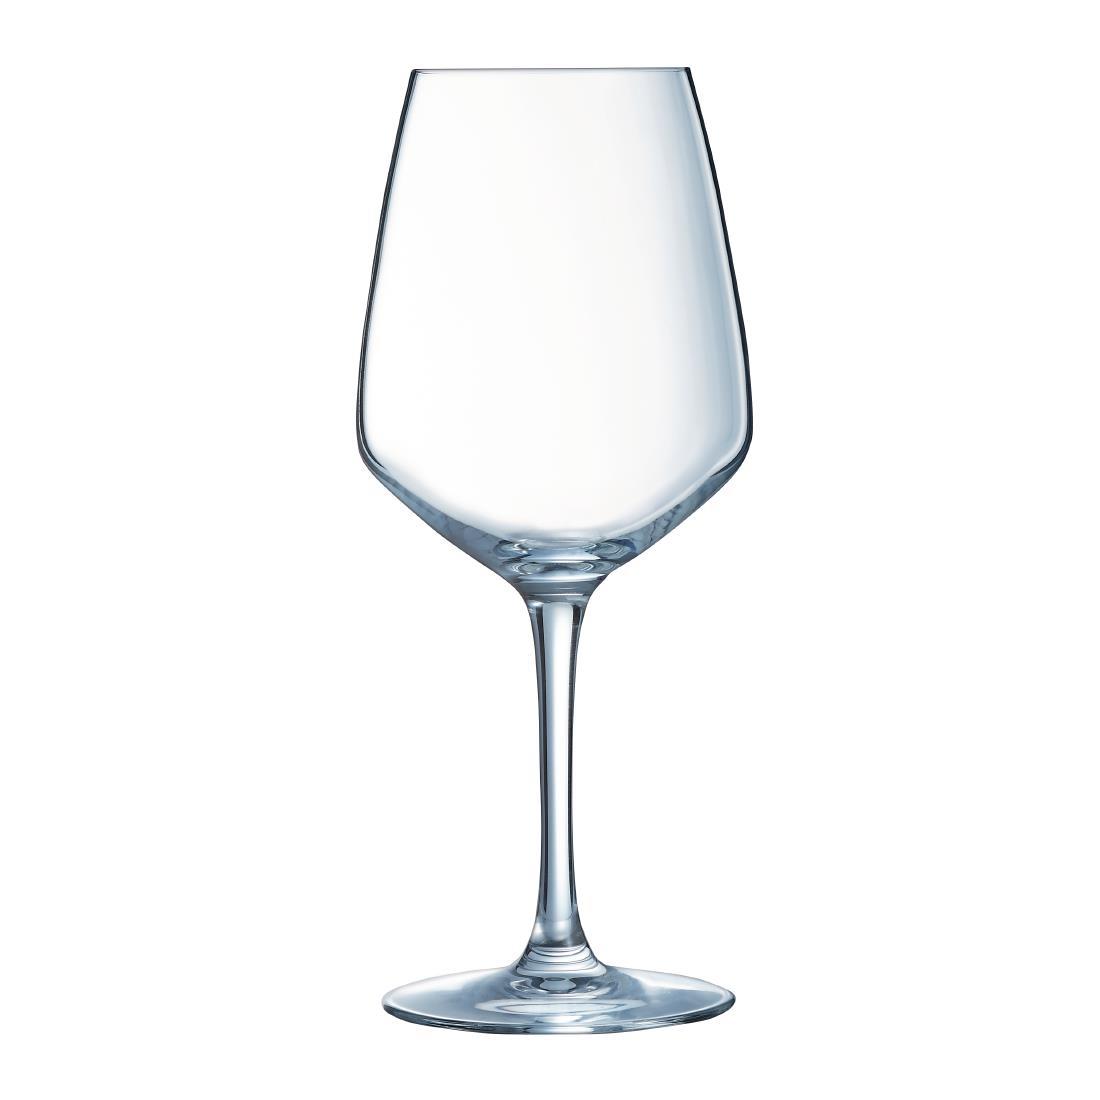 Arcoroc Juliette Wine Glasses 500ml (Pack of 24) - CT961  - 1